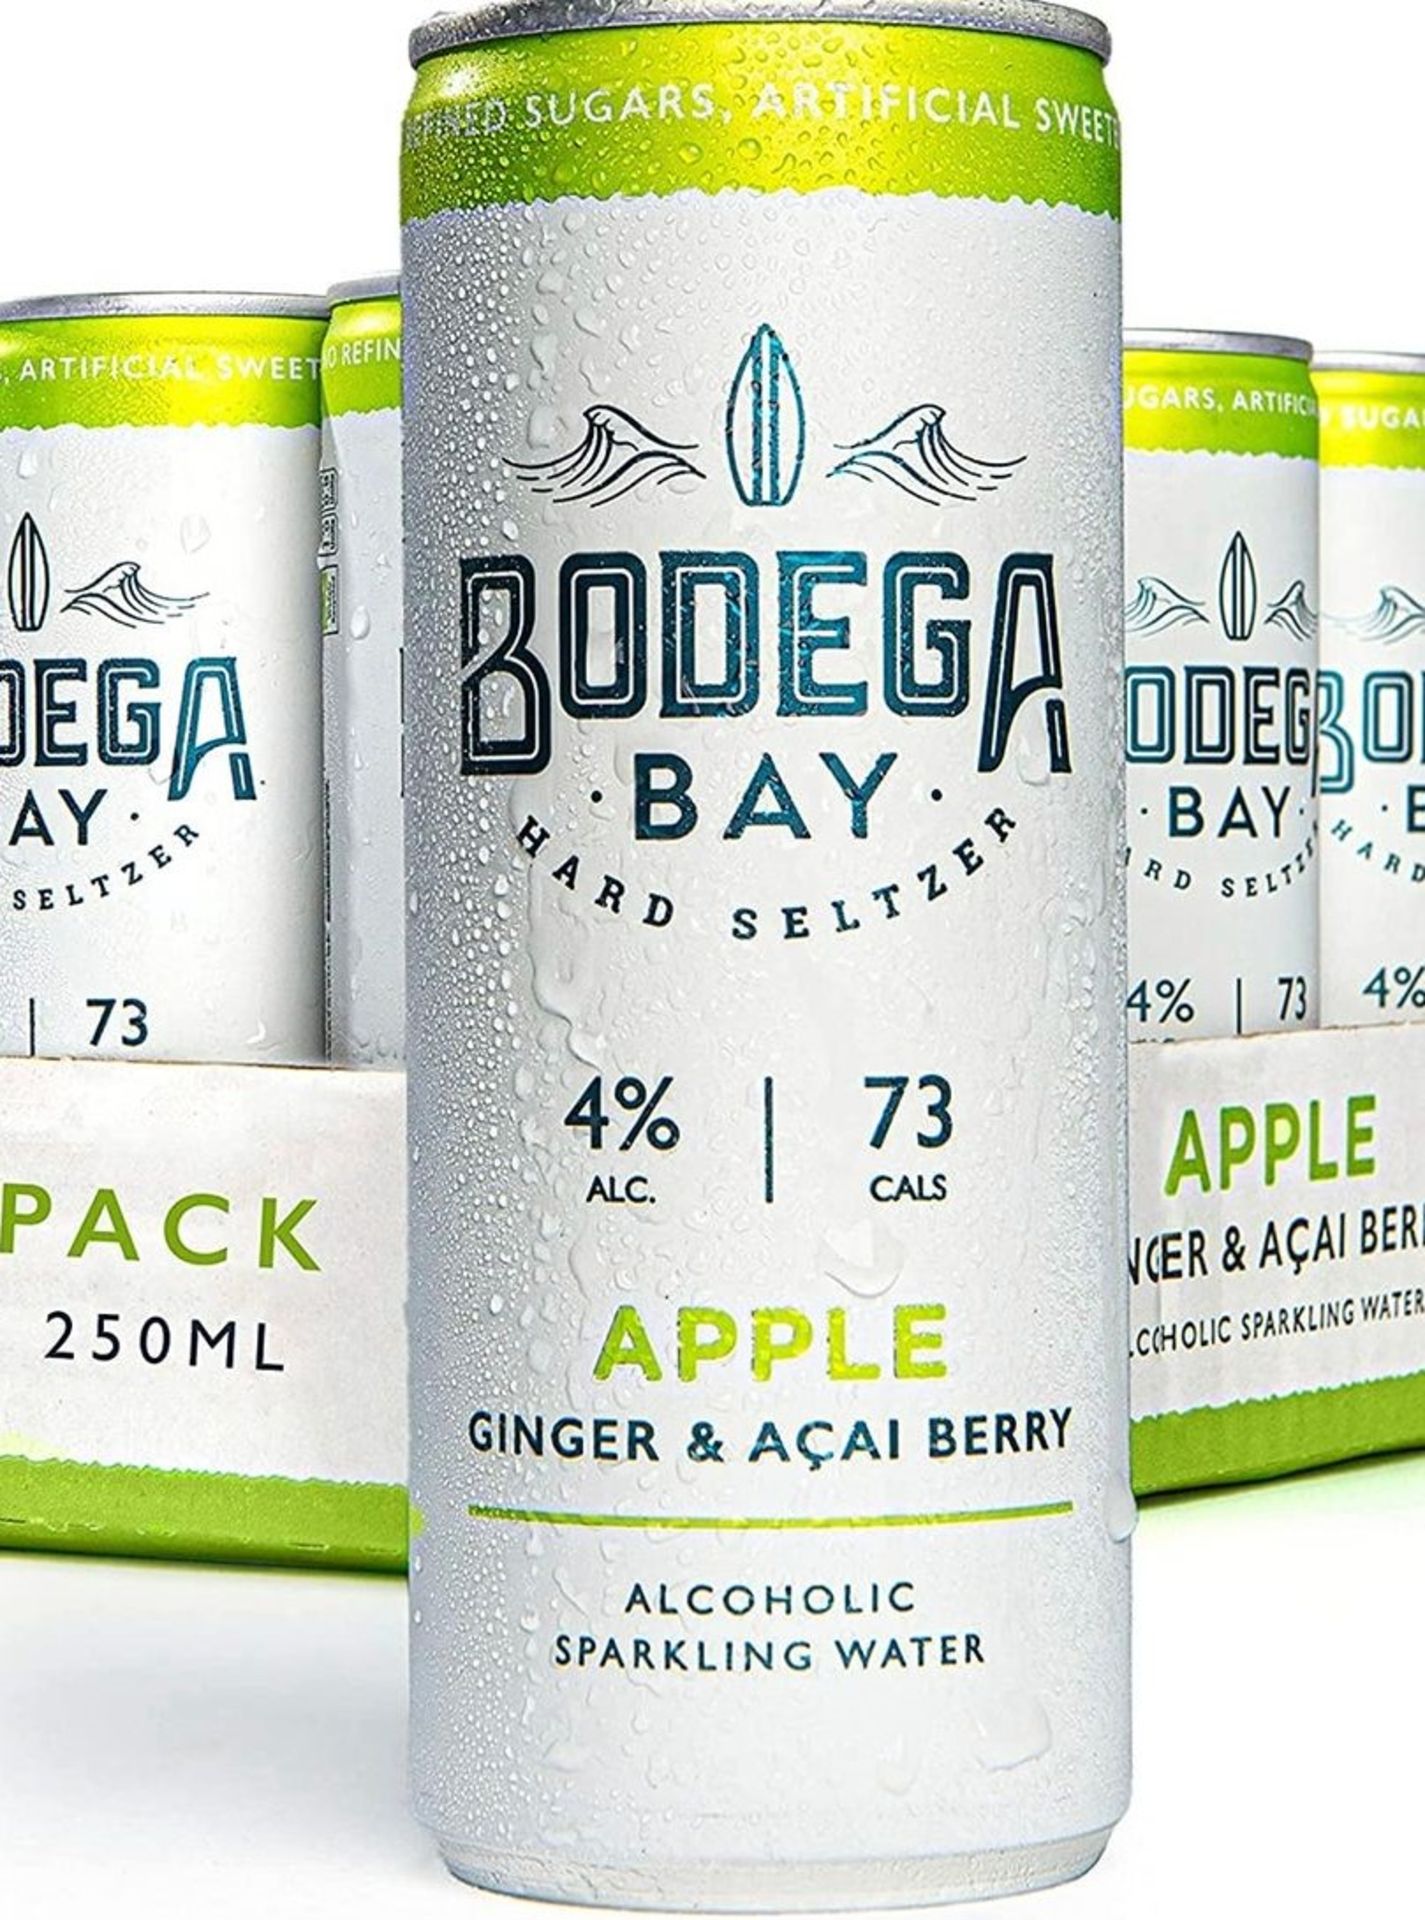 24 x Bodega Bay Hard Seltzer 250ml Alcoholic Sparkling Water Drinks - Apple Ginger & Acai Berry - Image 2 of 11